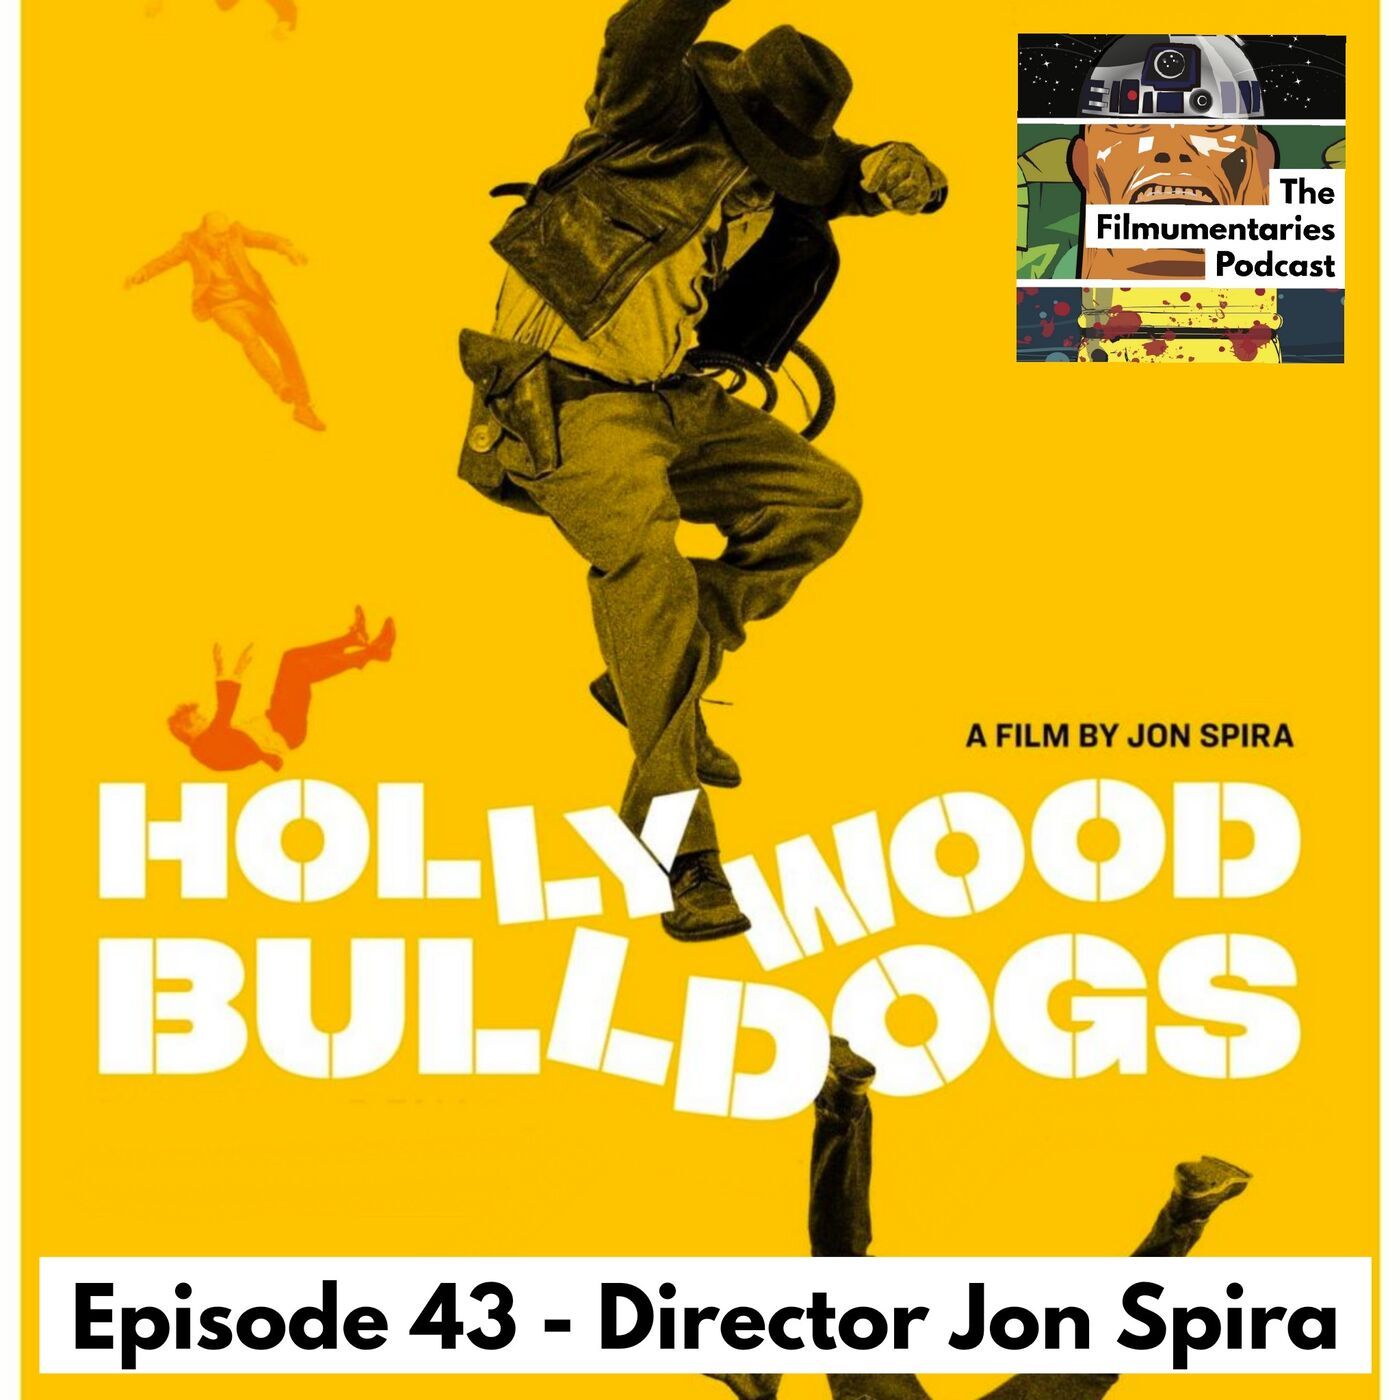 43 - Jon Spira - Director of Elstree 1976 and Hollywood Bulldogs